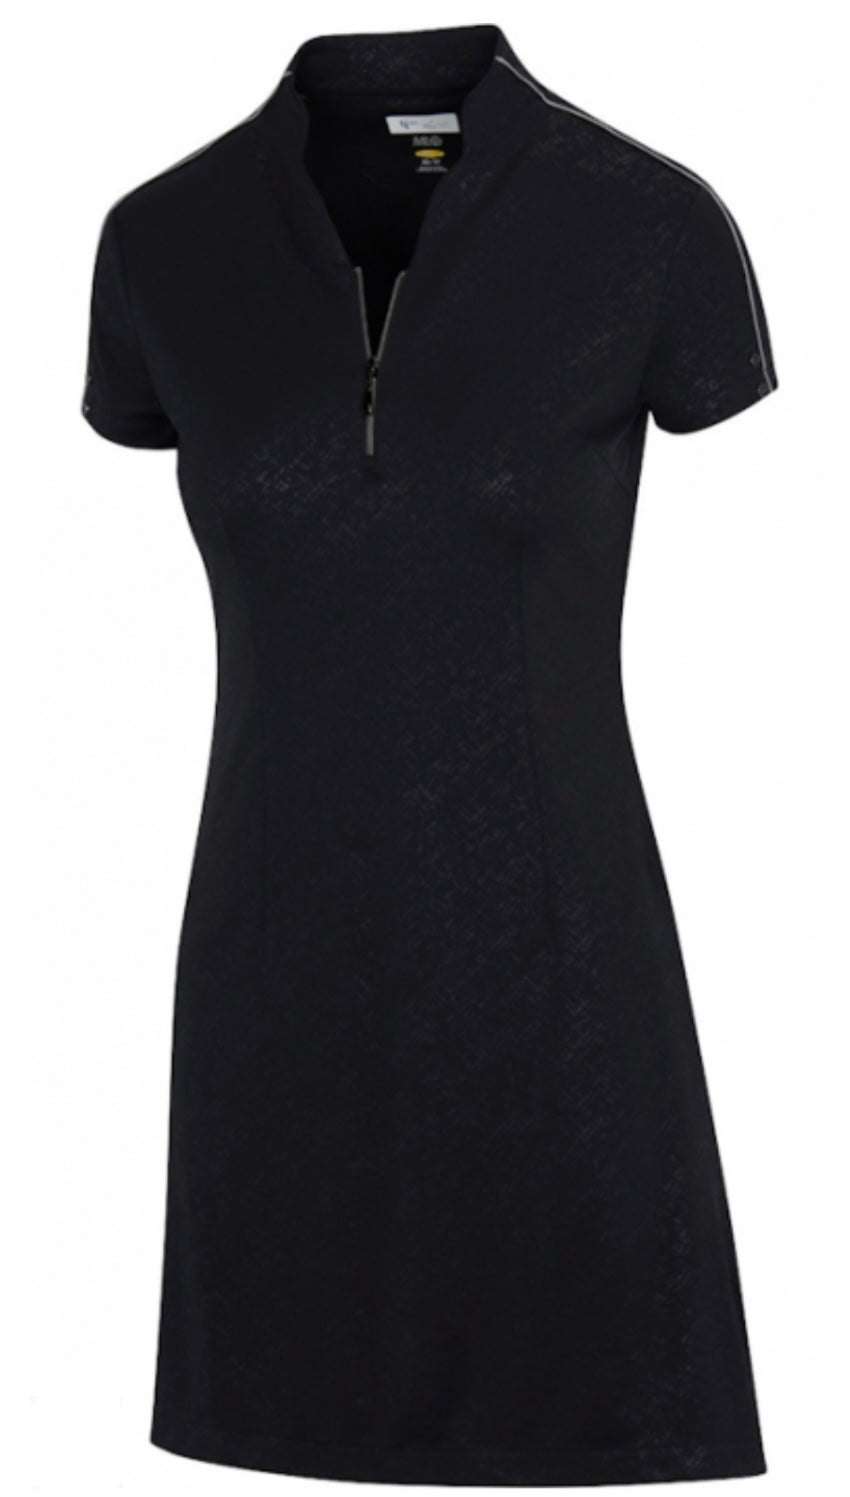 Greg Norman ML75 Aurora Short Sleeve Zip Golf Dress - ASTRAL (Black) G2F23K608 Size: Medium